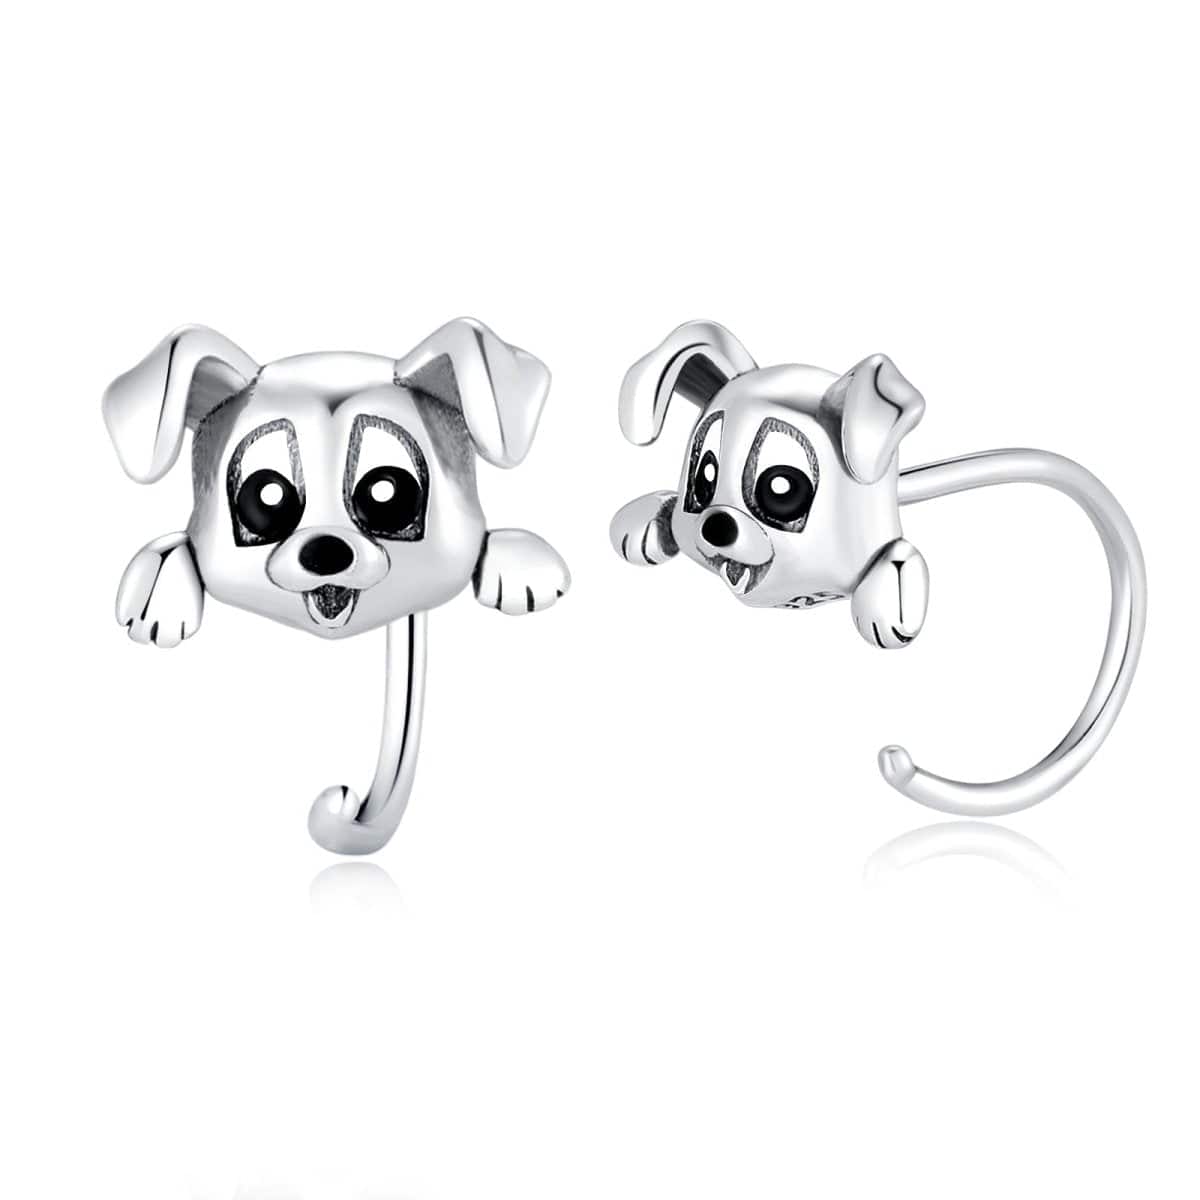 "Puppies" Earrings - Milas Jewels Shop